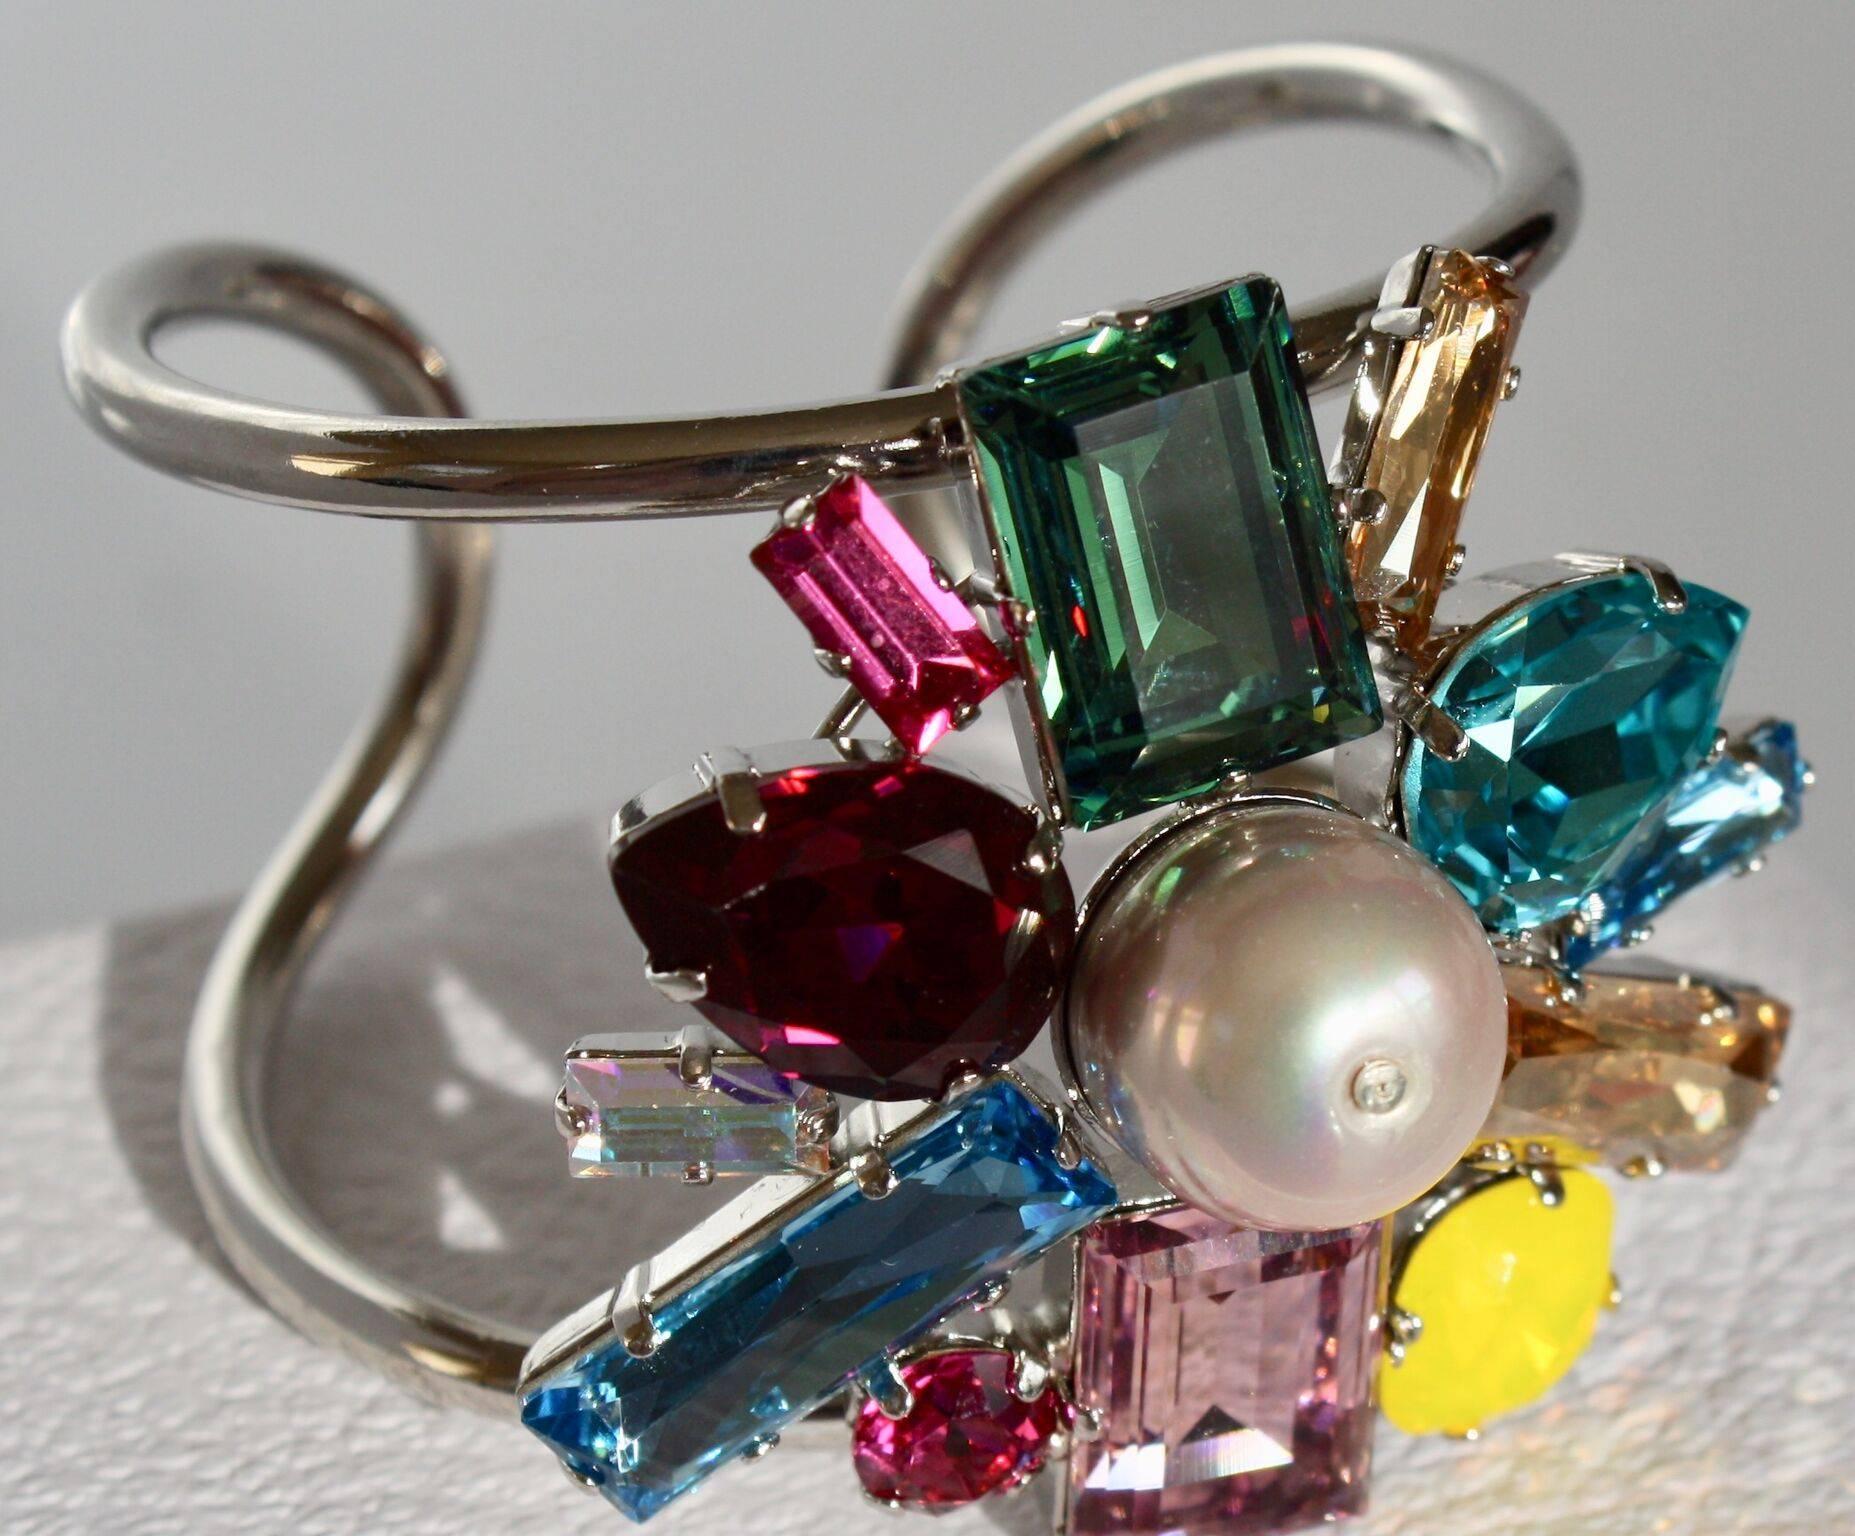 Swarovski crystal and glass pearl cuff bracelet from Philippe Ferrandis. 

Cuff is 8